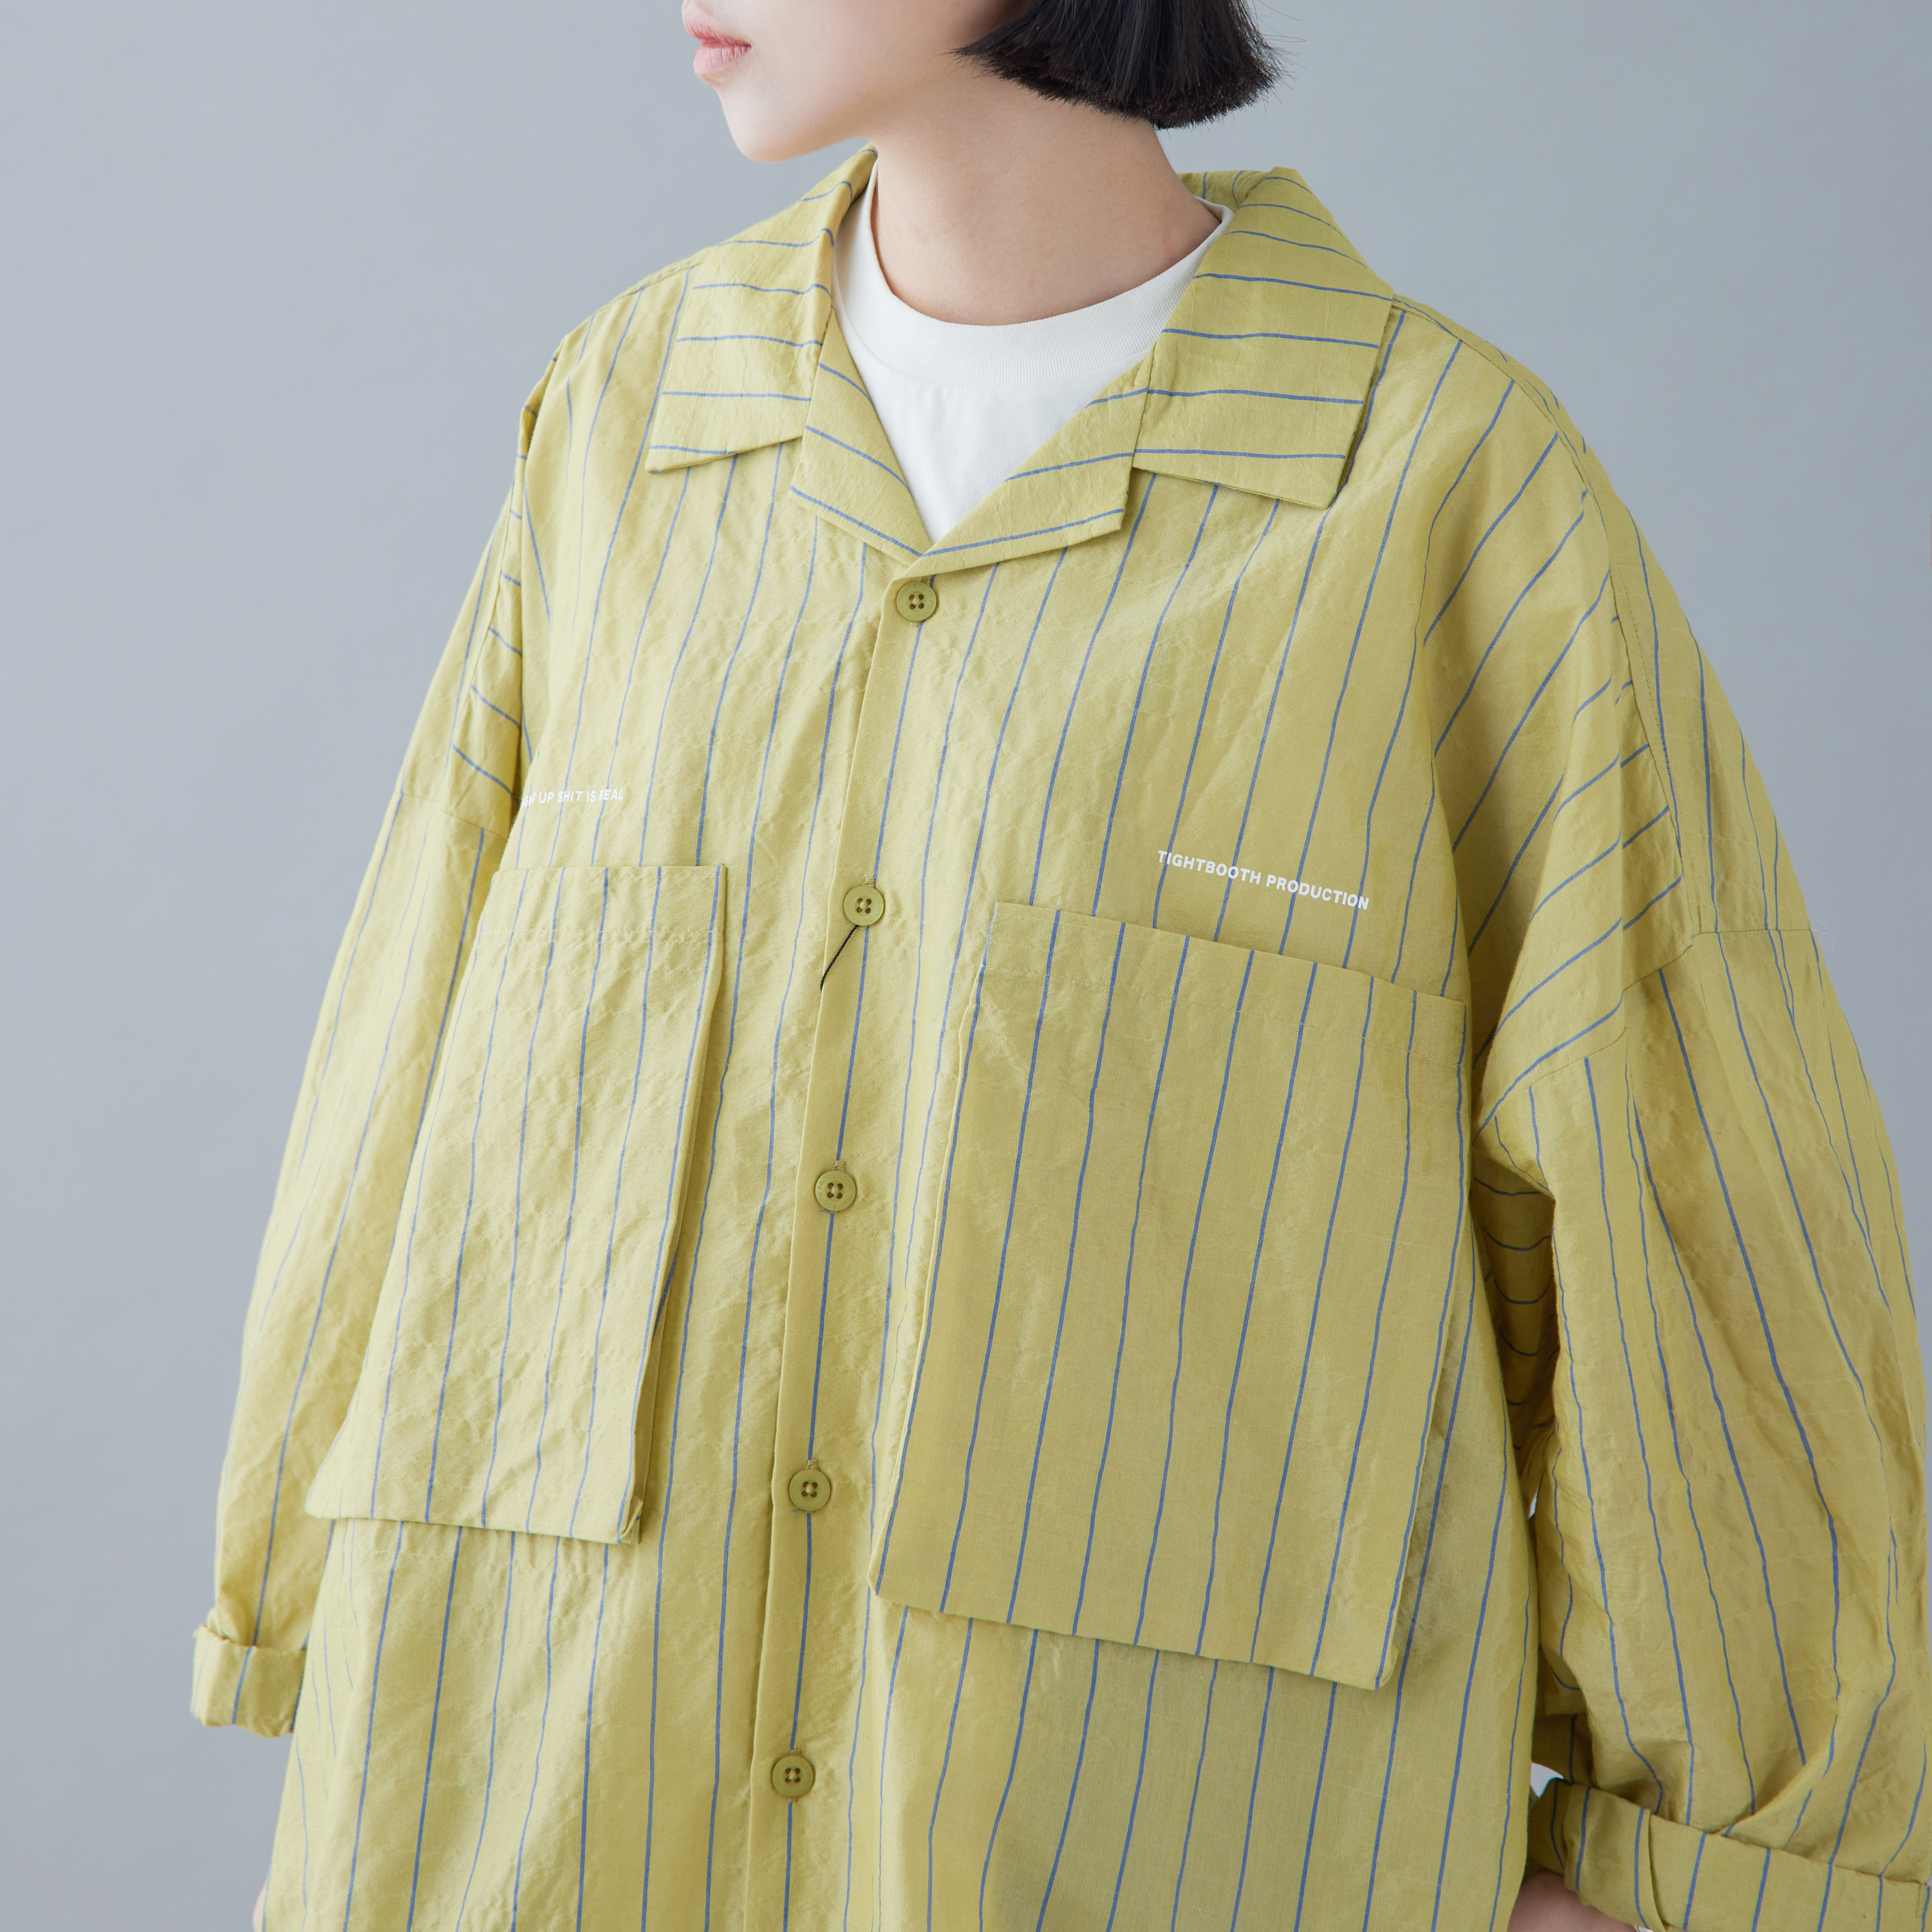 TIGHTBOOTH - Stripe Big Shirt - 2 Colors